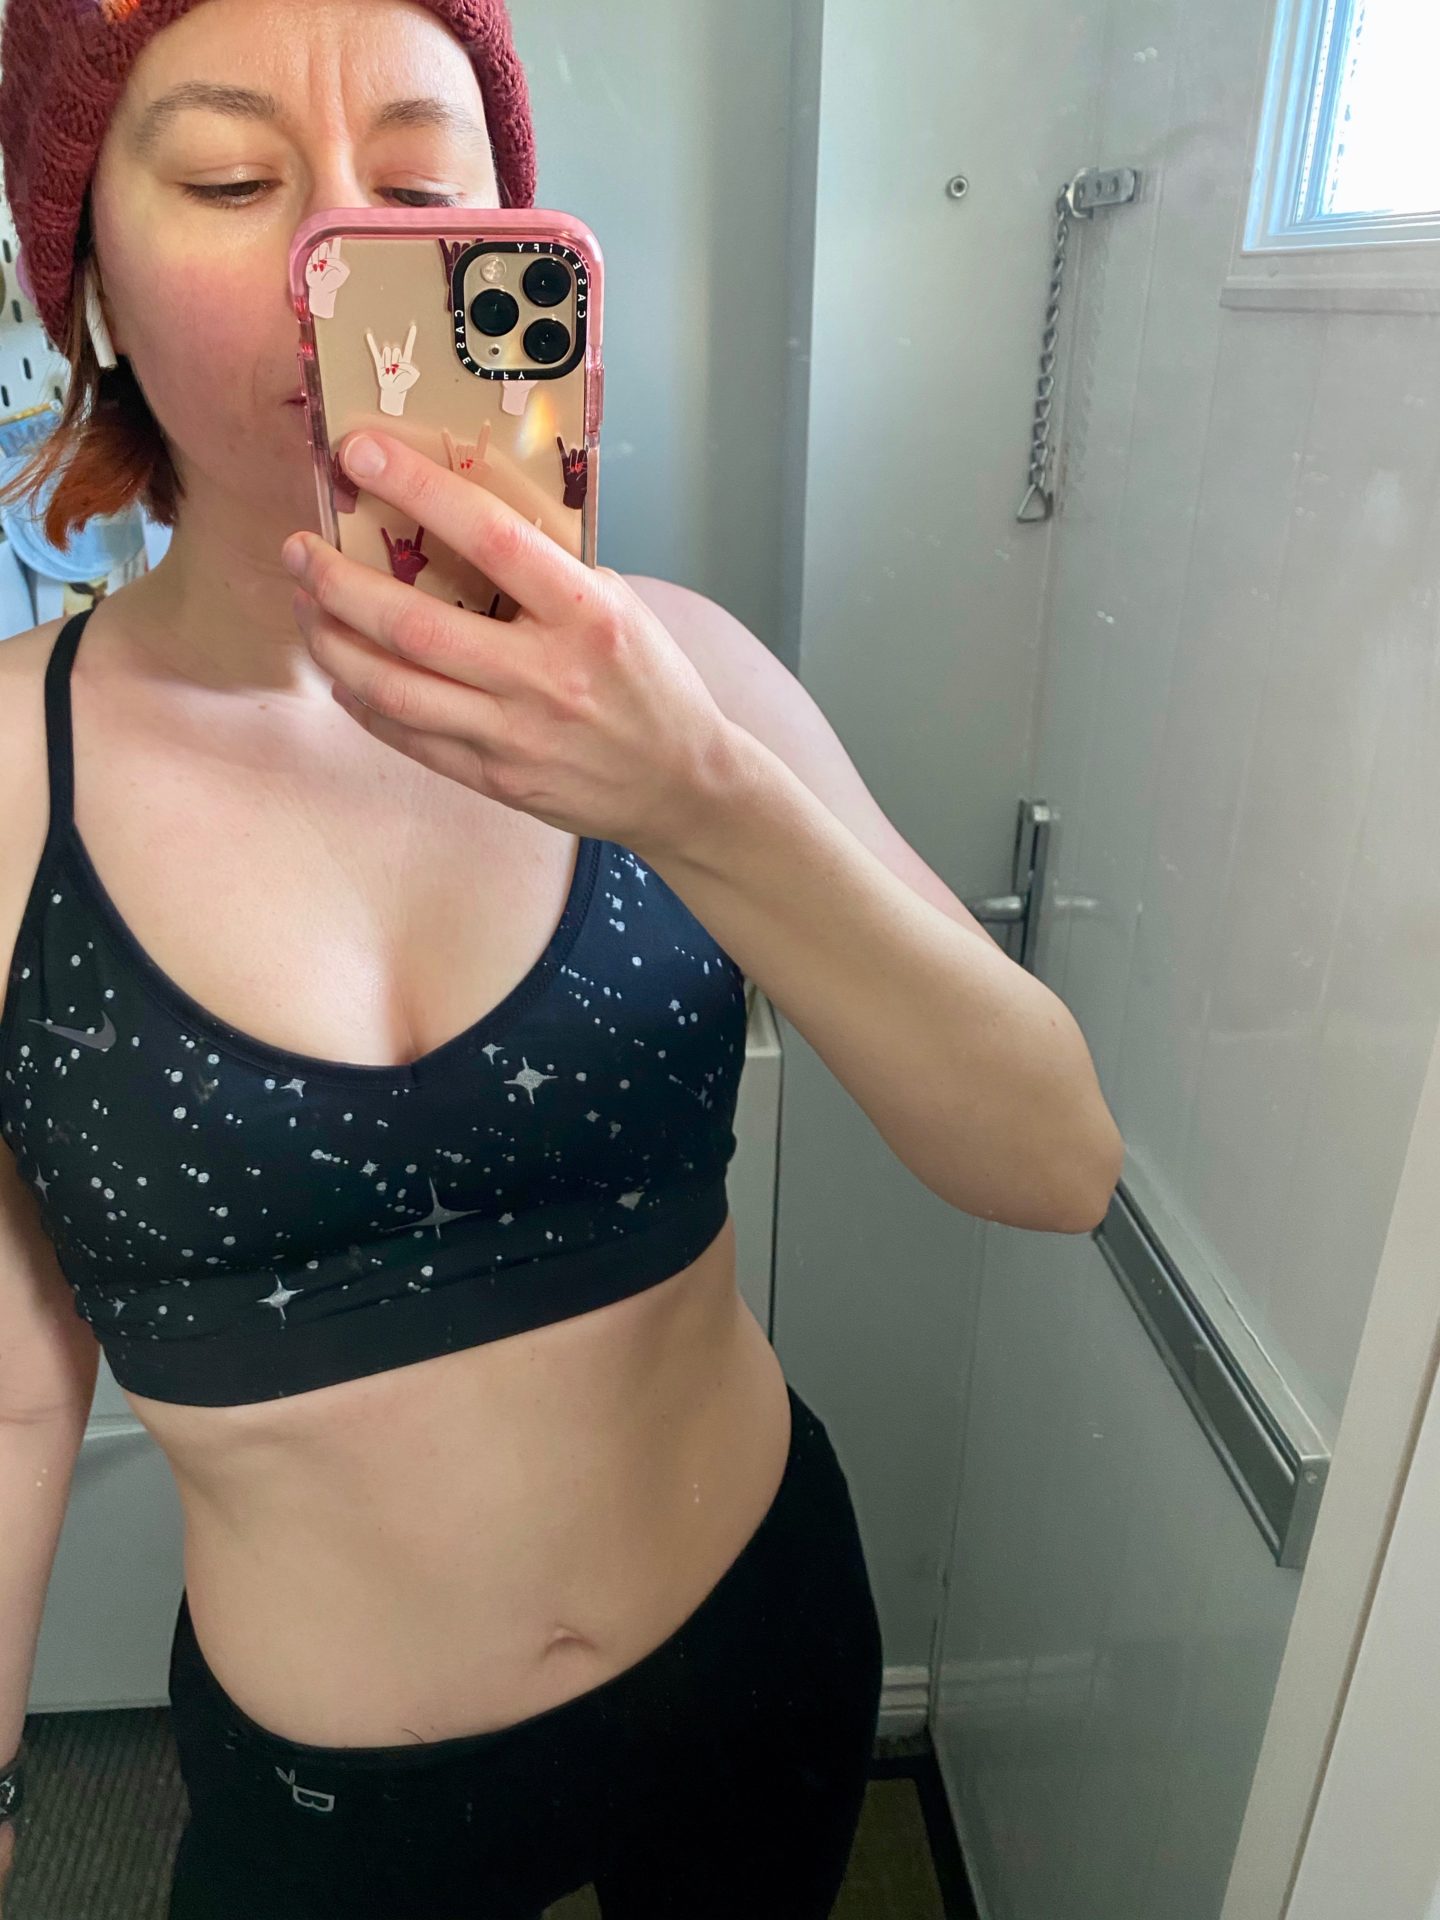 A woman in sports wear takes a selfie in a mirror, her abdomen is on display. 